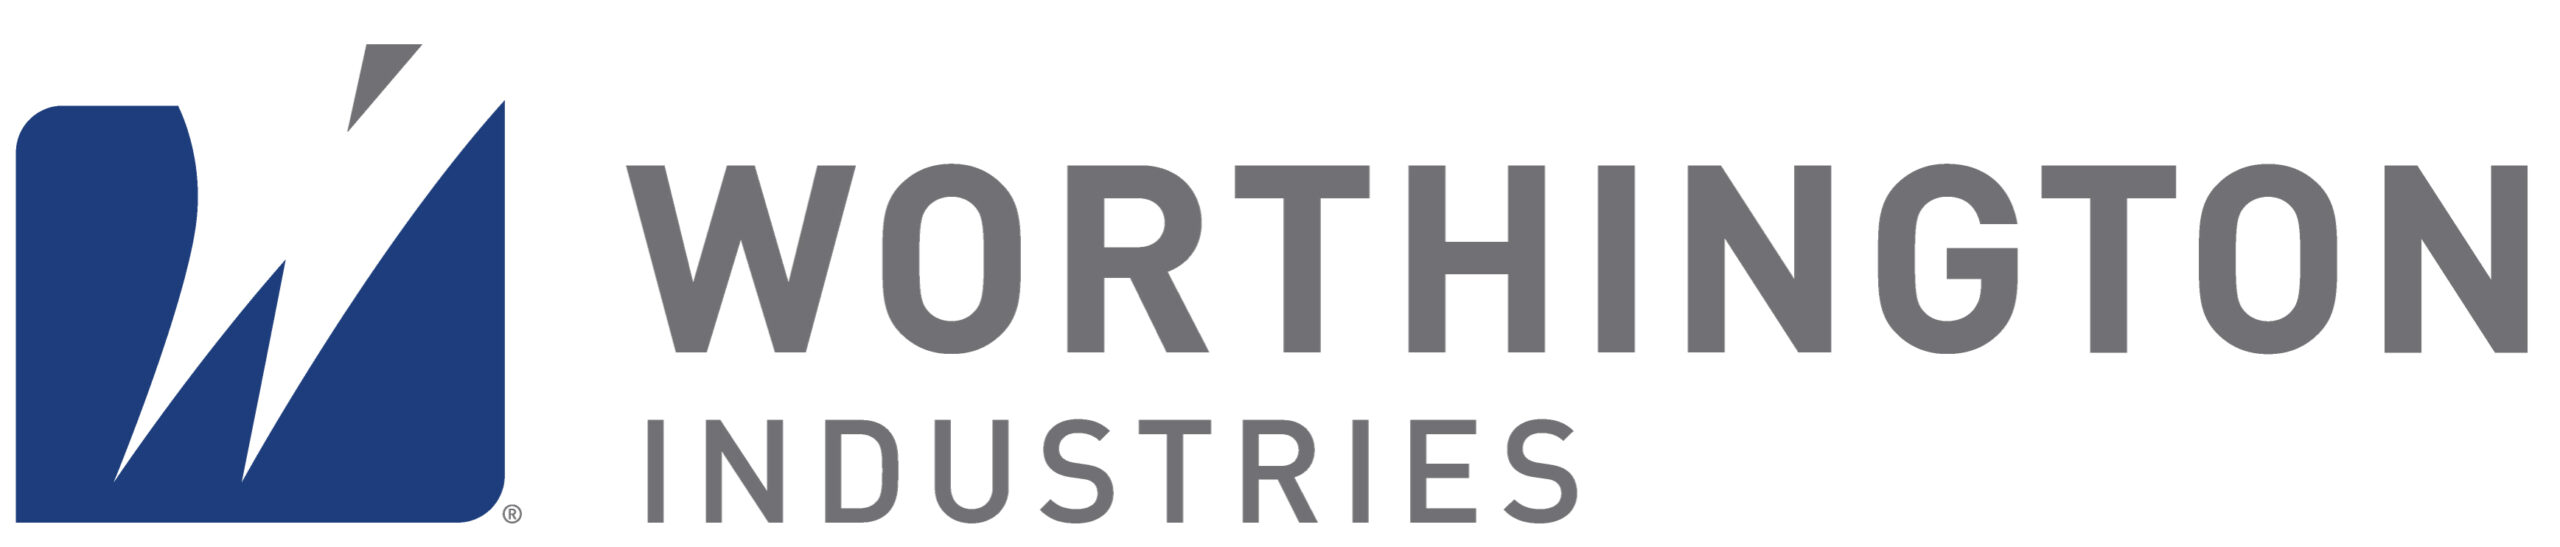 worthington_industries_logo